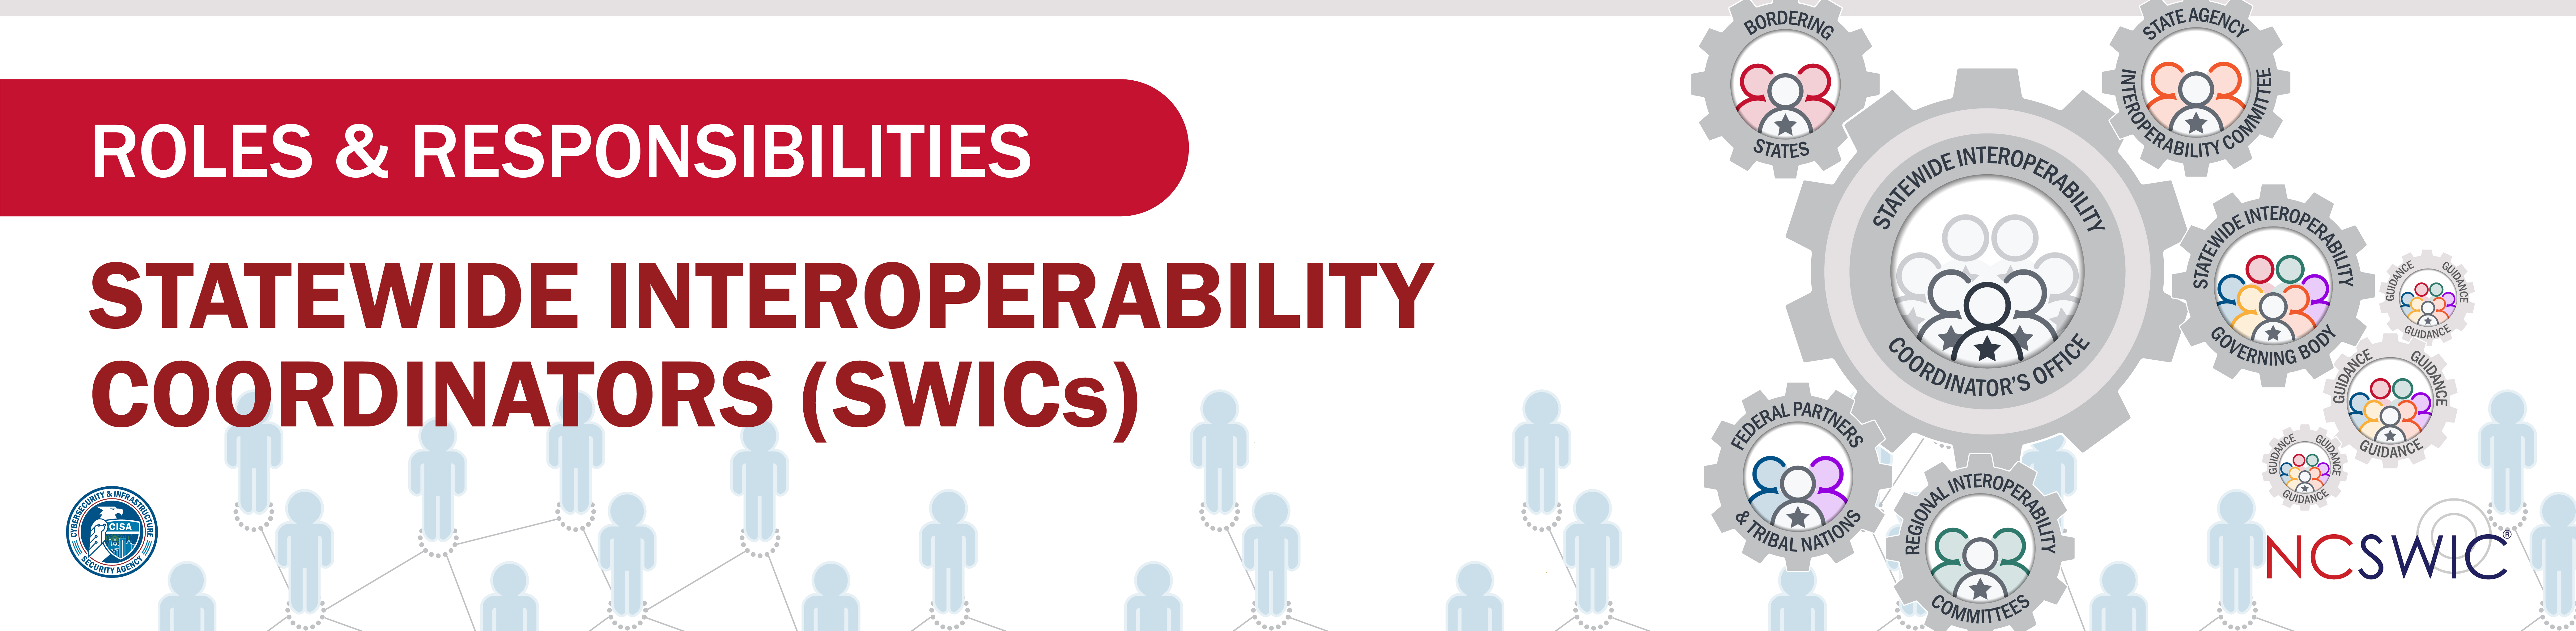 Roles and Responsibilities - Statewide Interoperability Coordinators (SWICs)